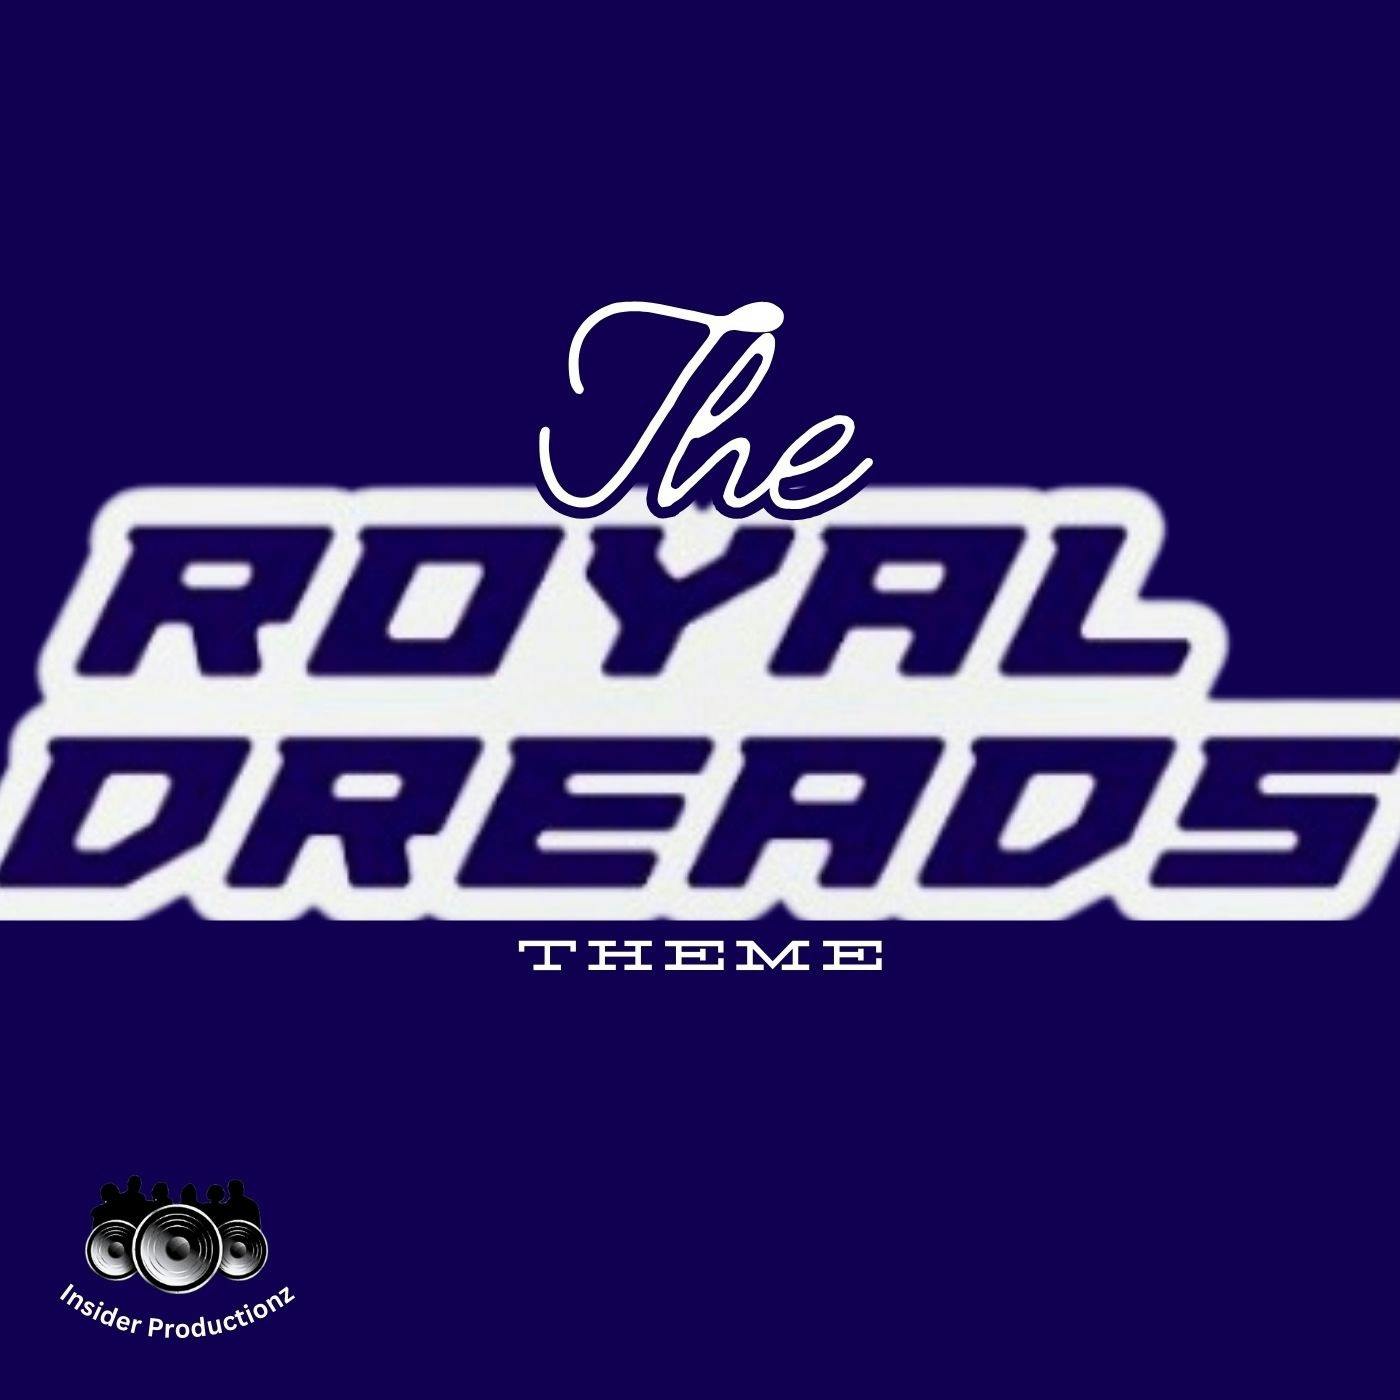 The Royal Dreads Theme